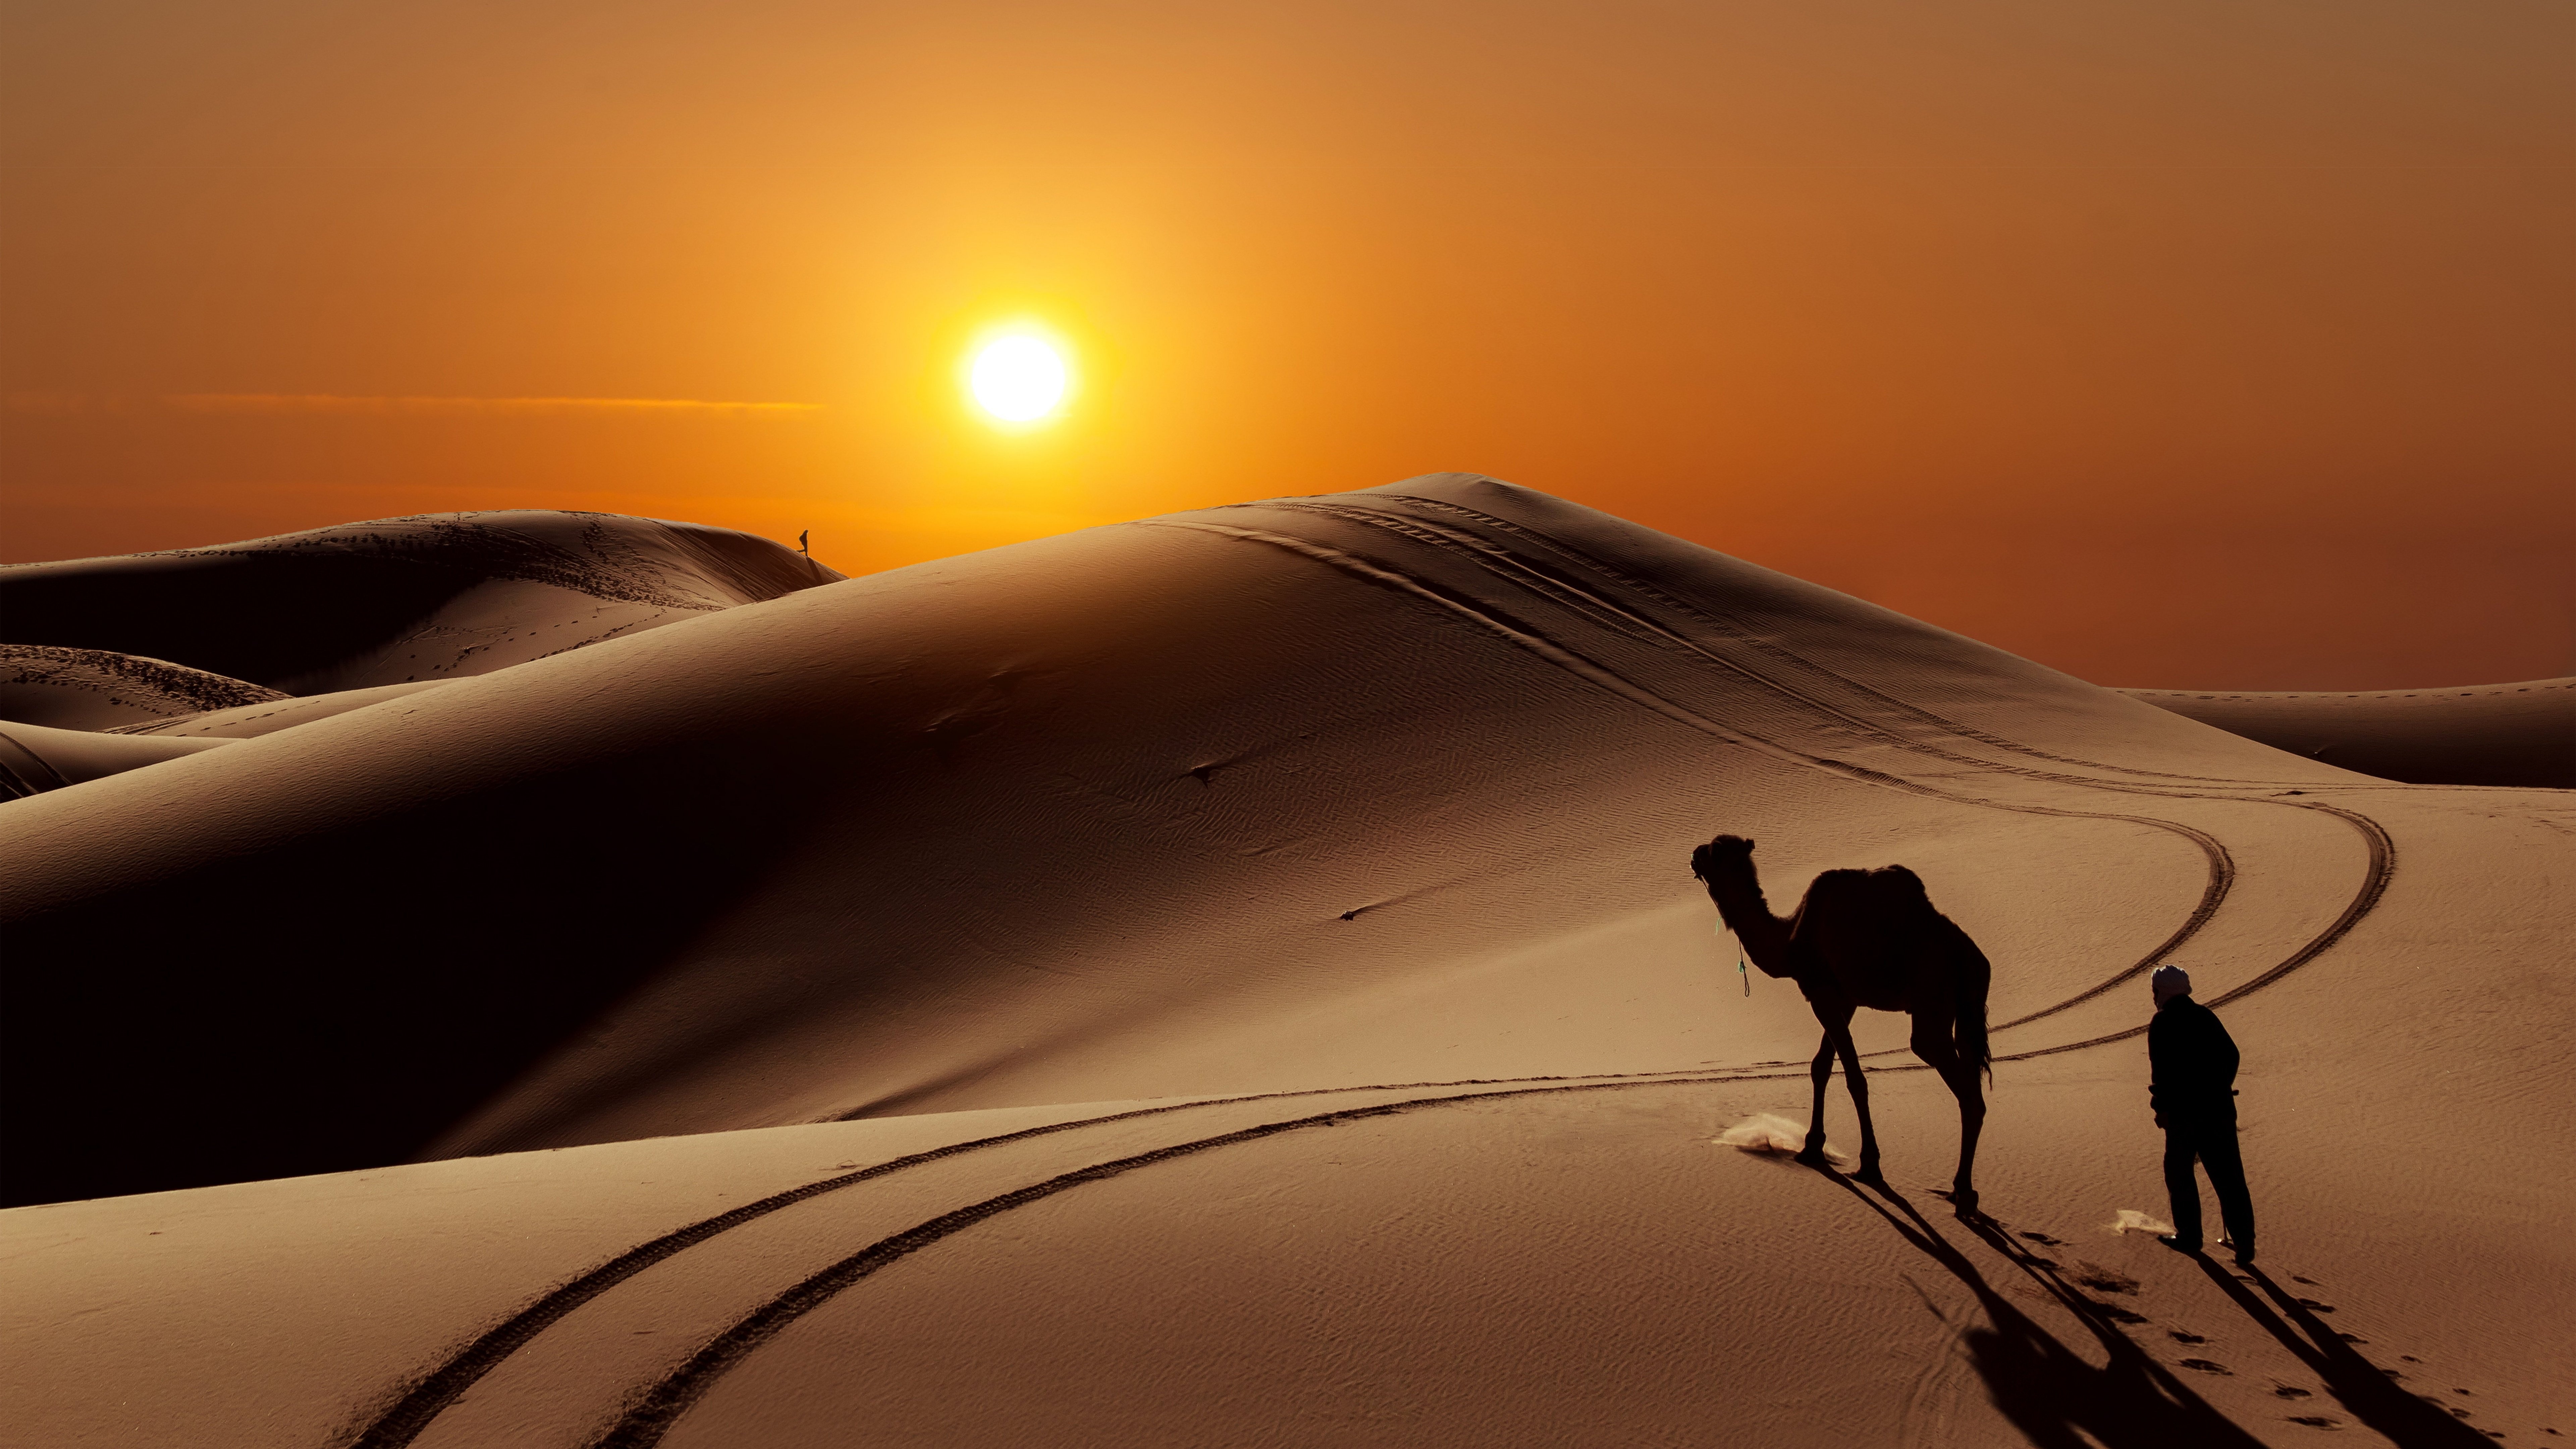 Wallpapers camel desert people on the desktop